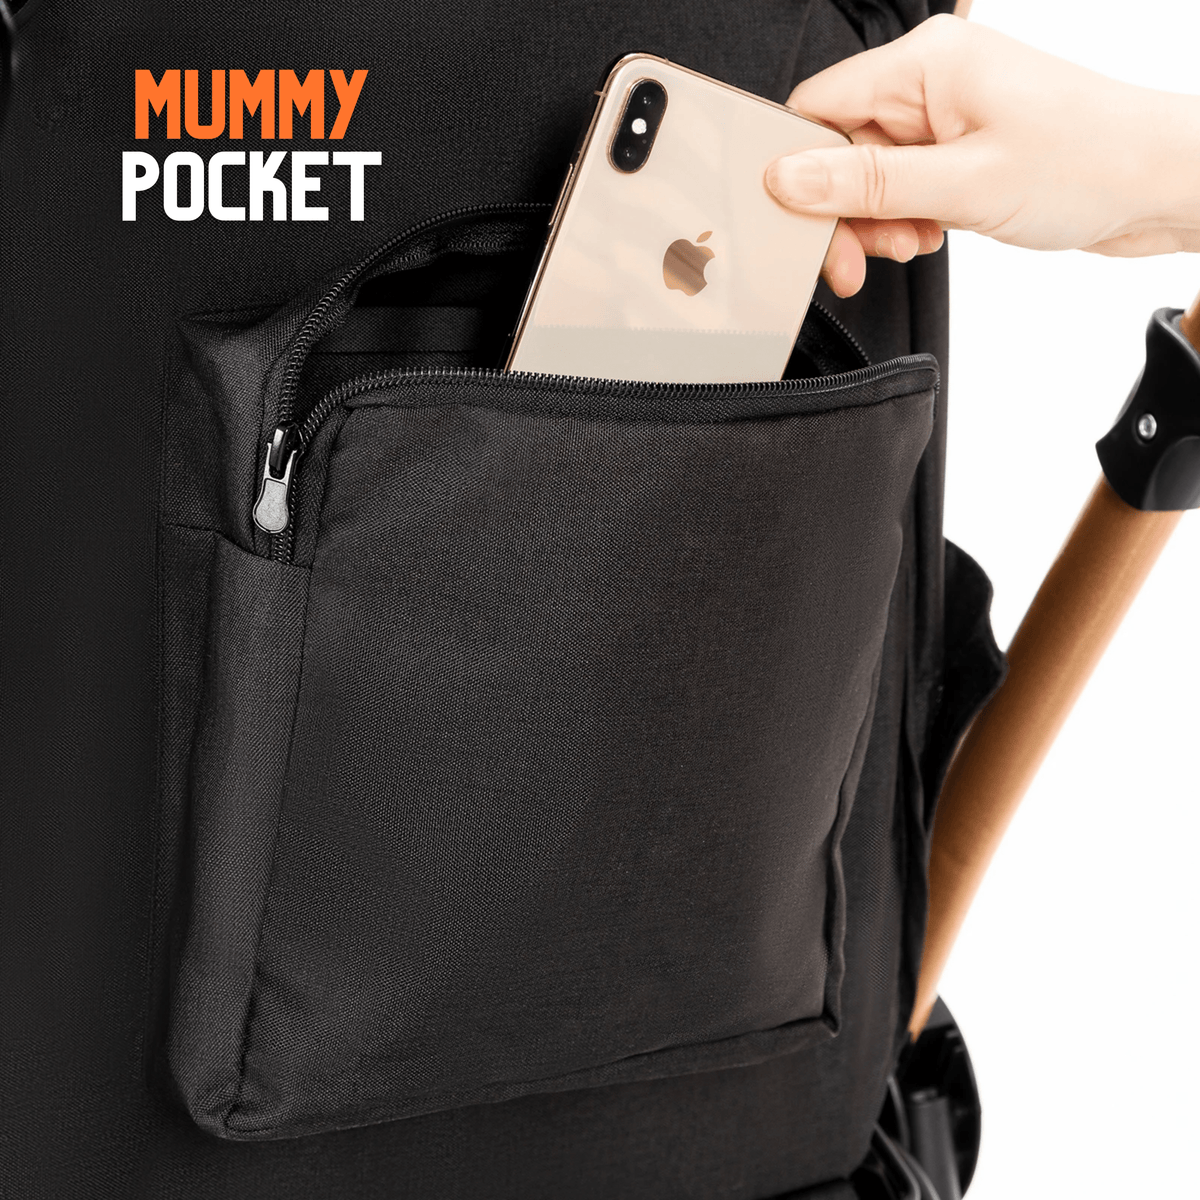 Pocket for mummy